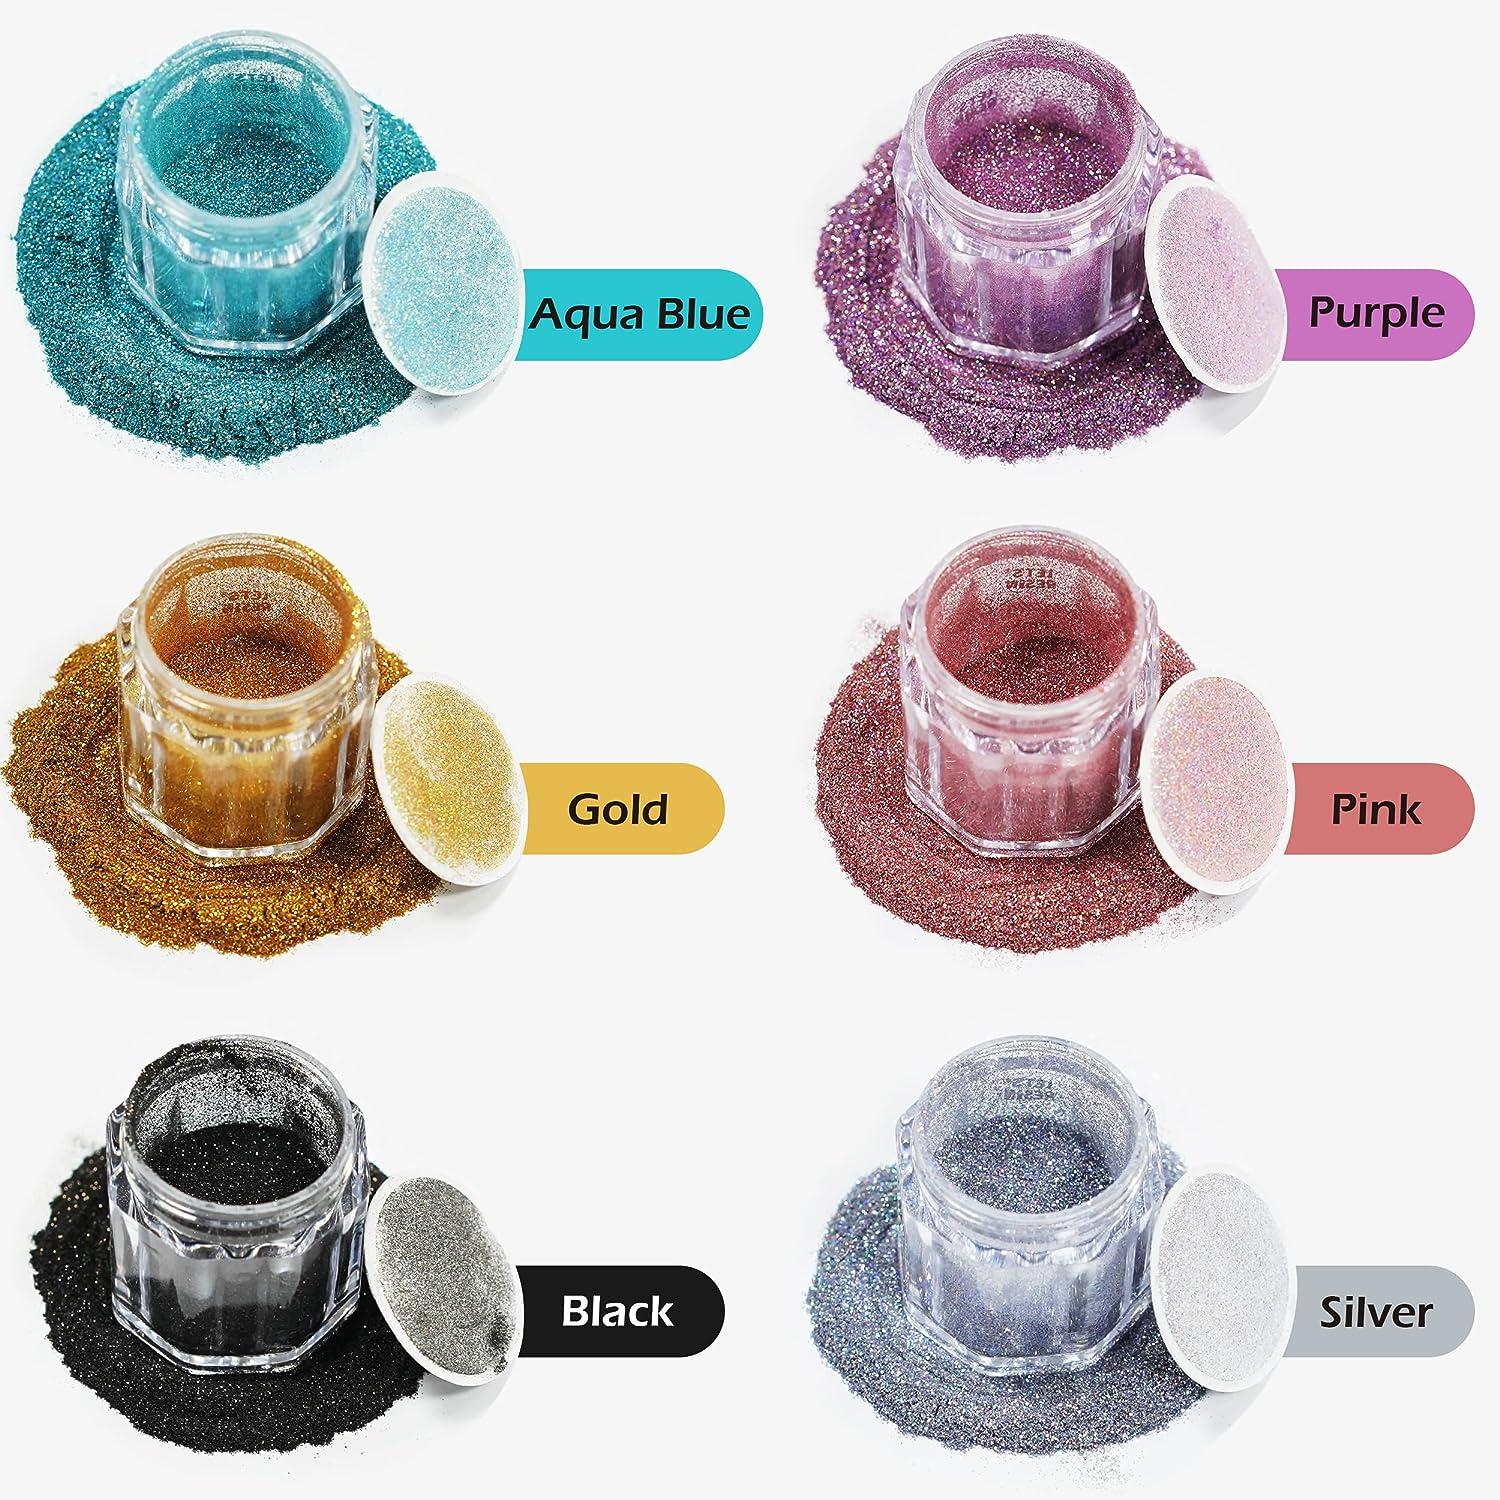 Let's Resin Mica Powder - 50 Colors/Each 0.17oz